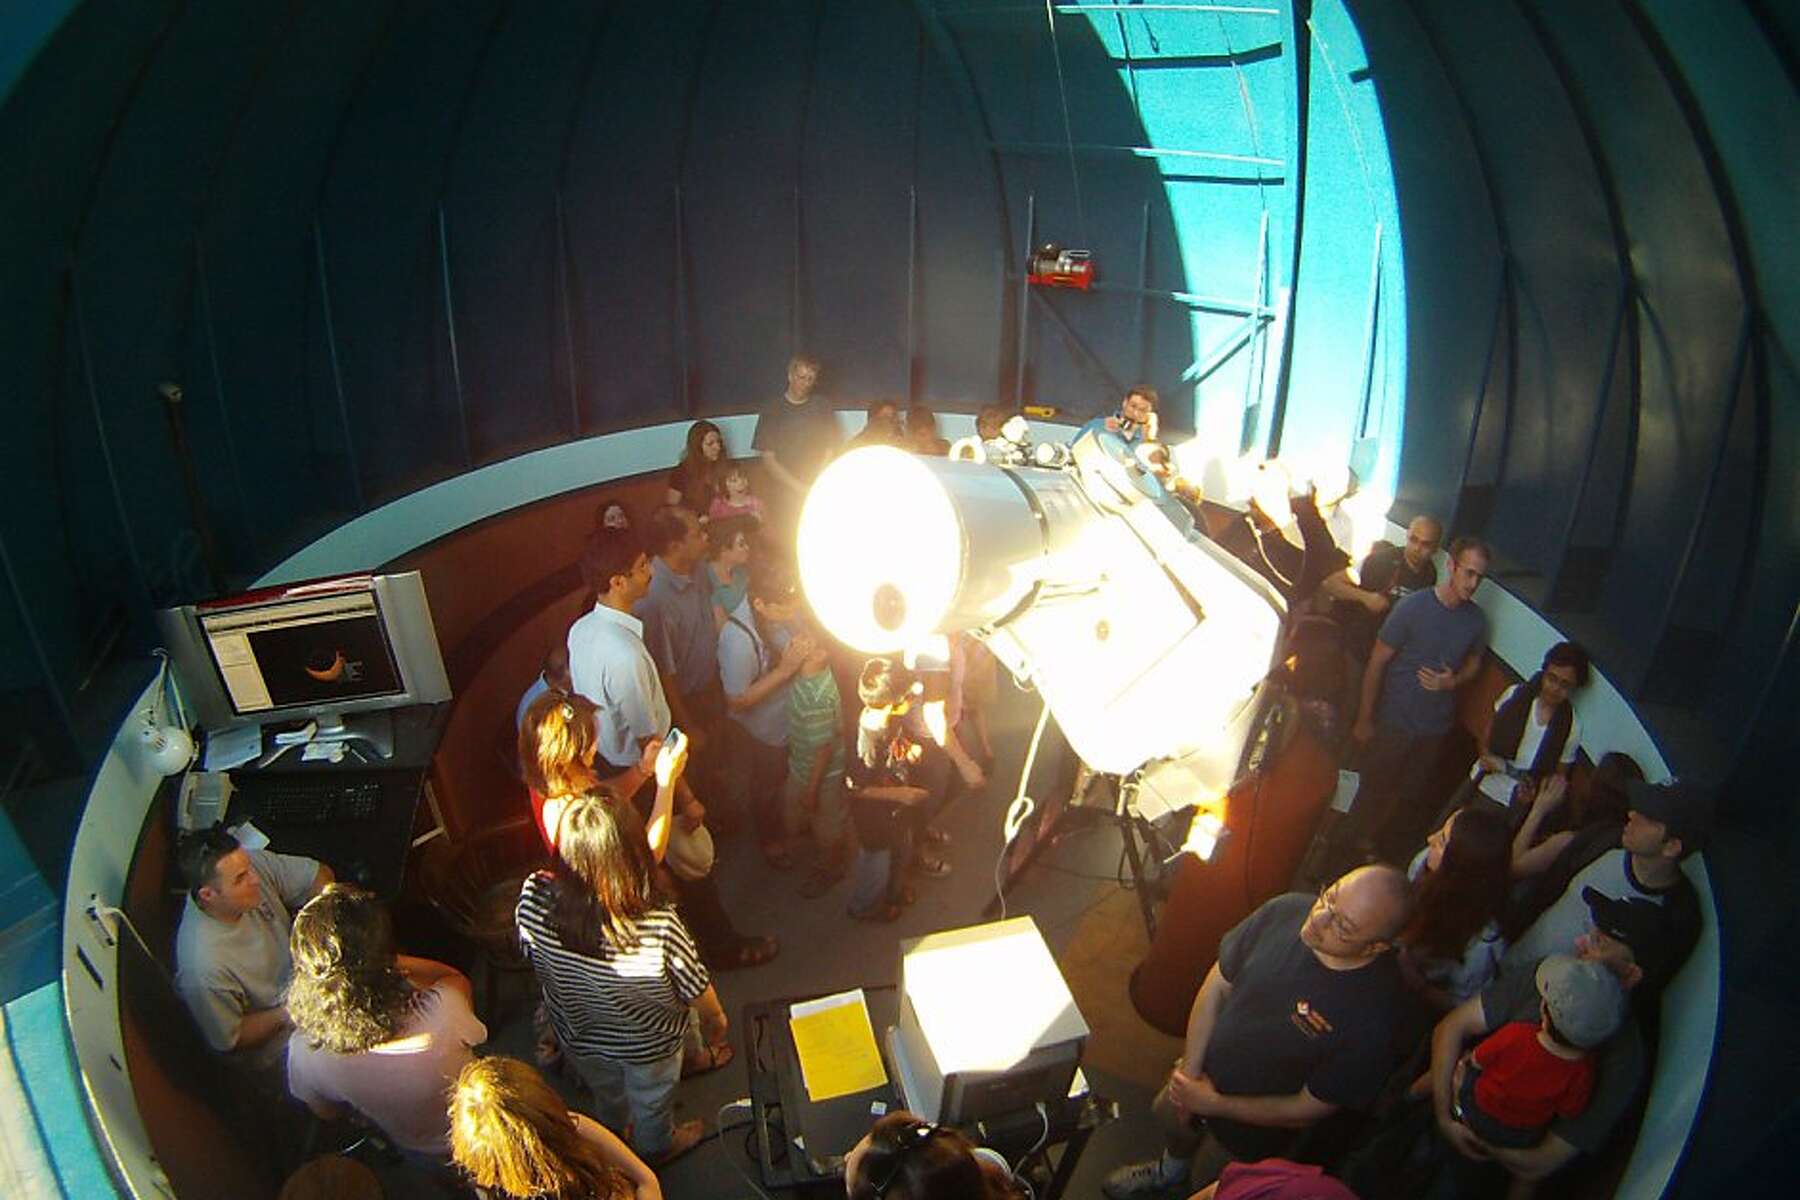 astronomy observatory inside